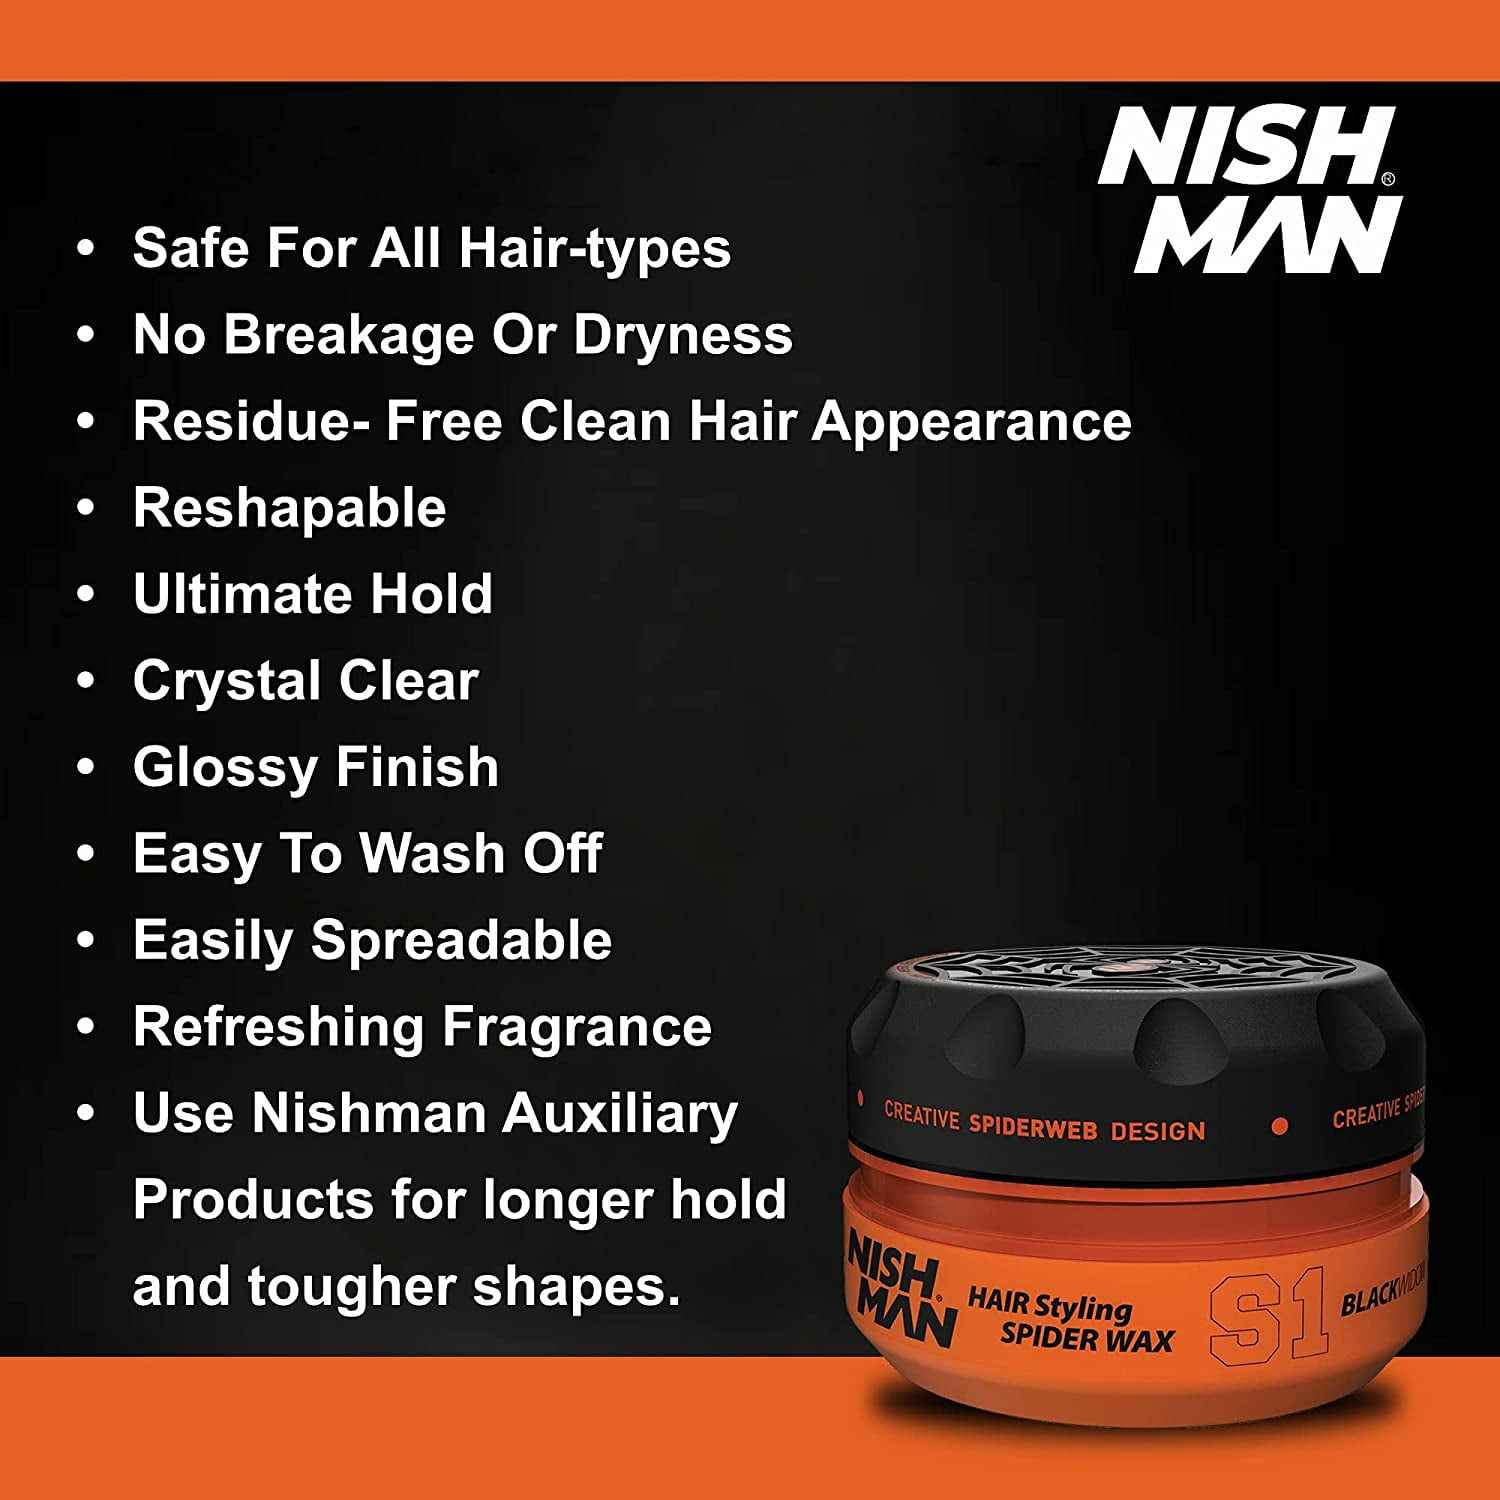 Nishman S6 Keratin Hair Styling Spider Wax (150ml/5oz)